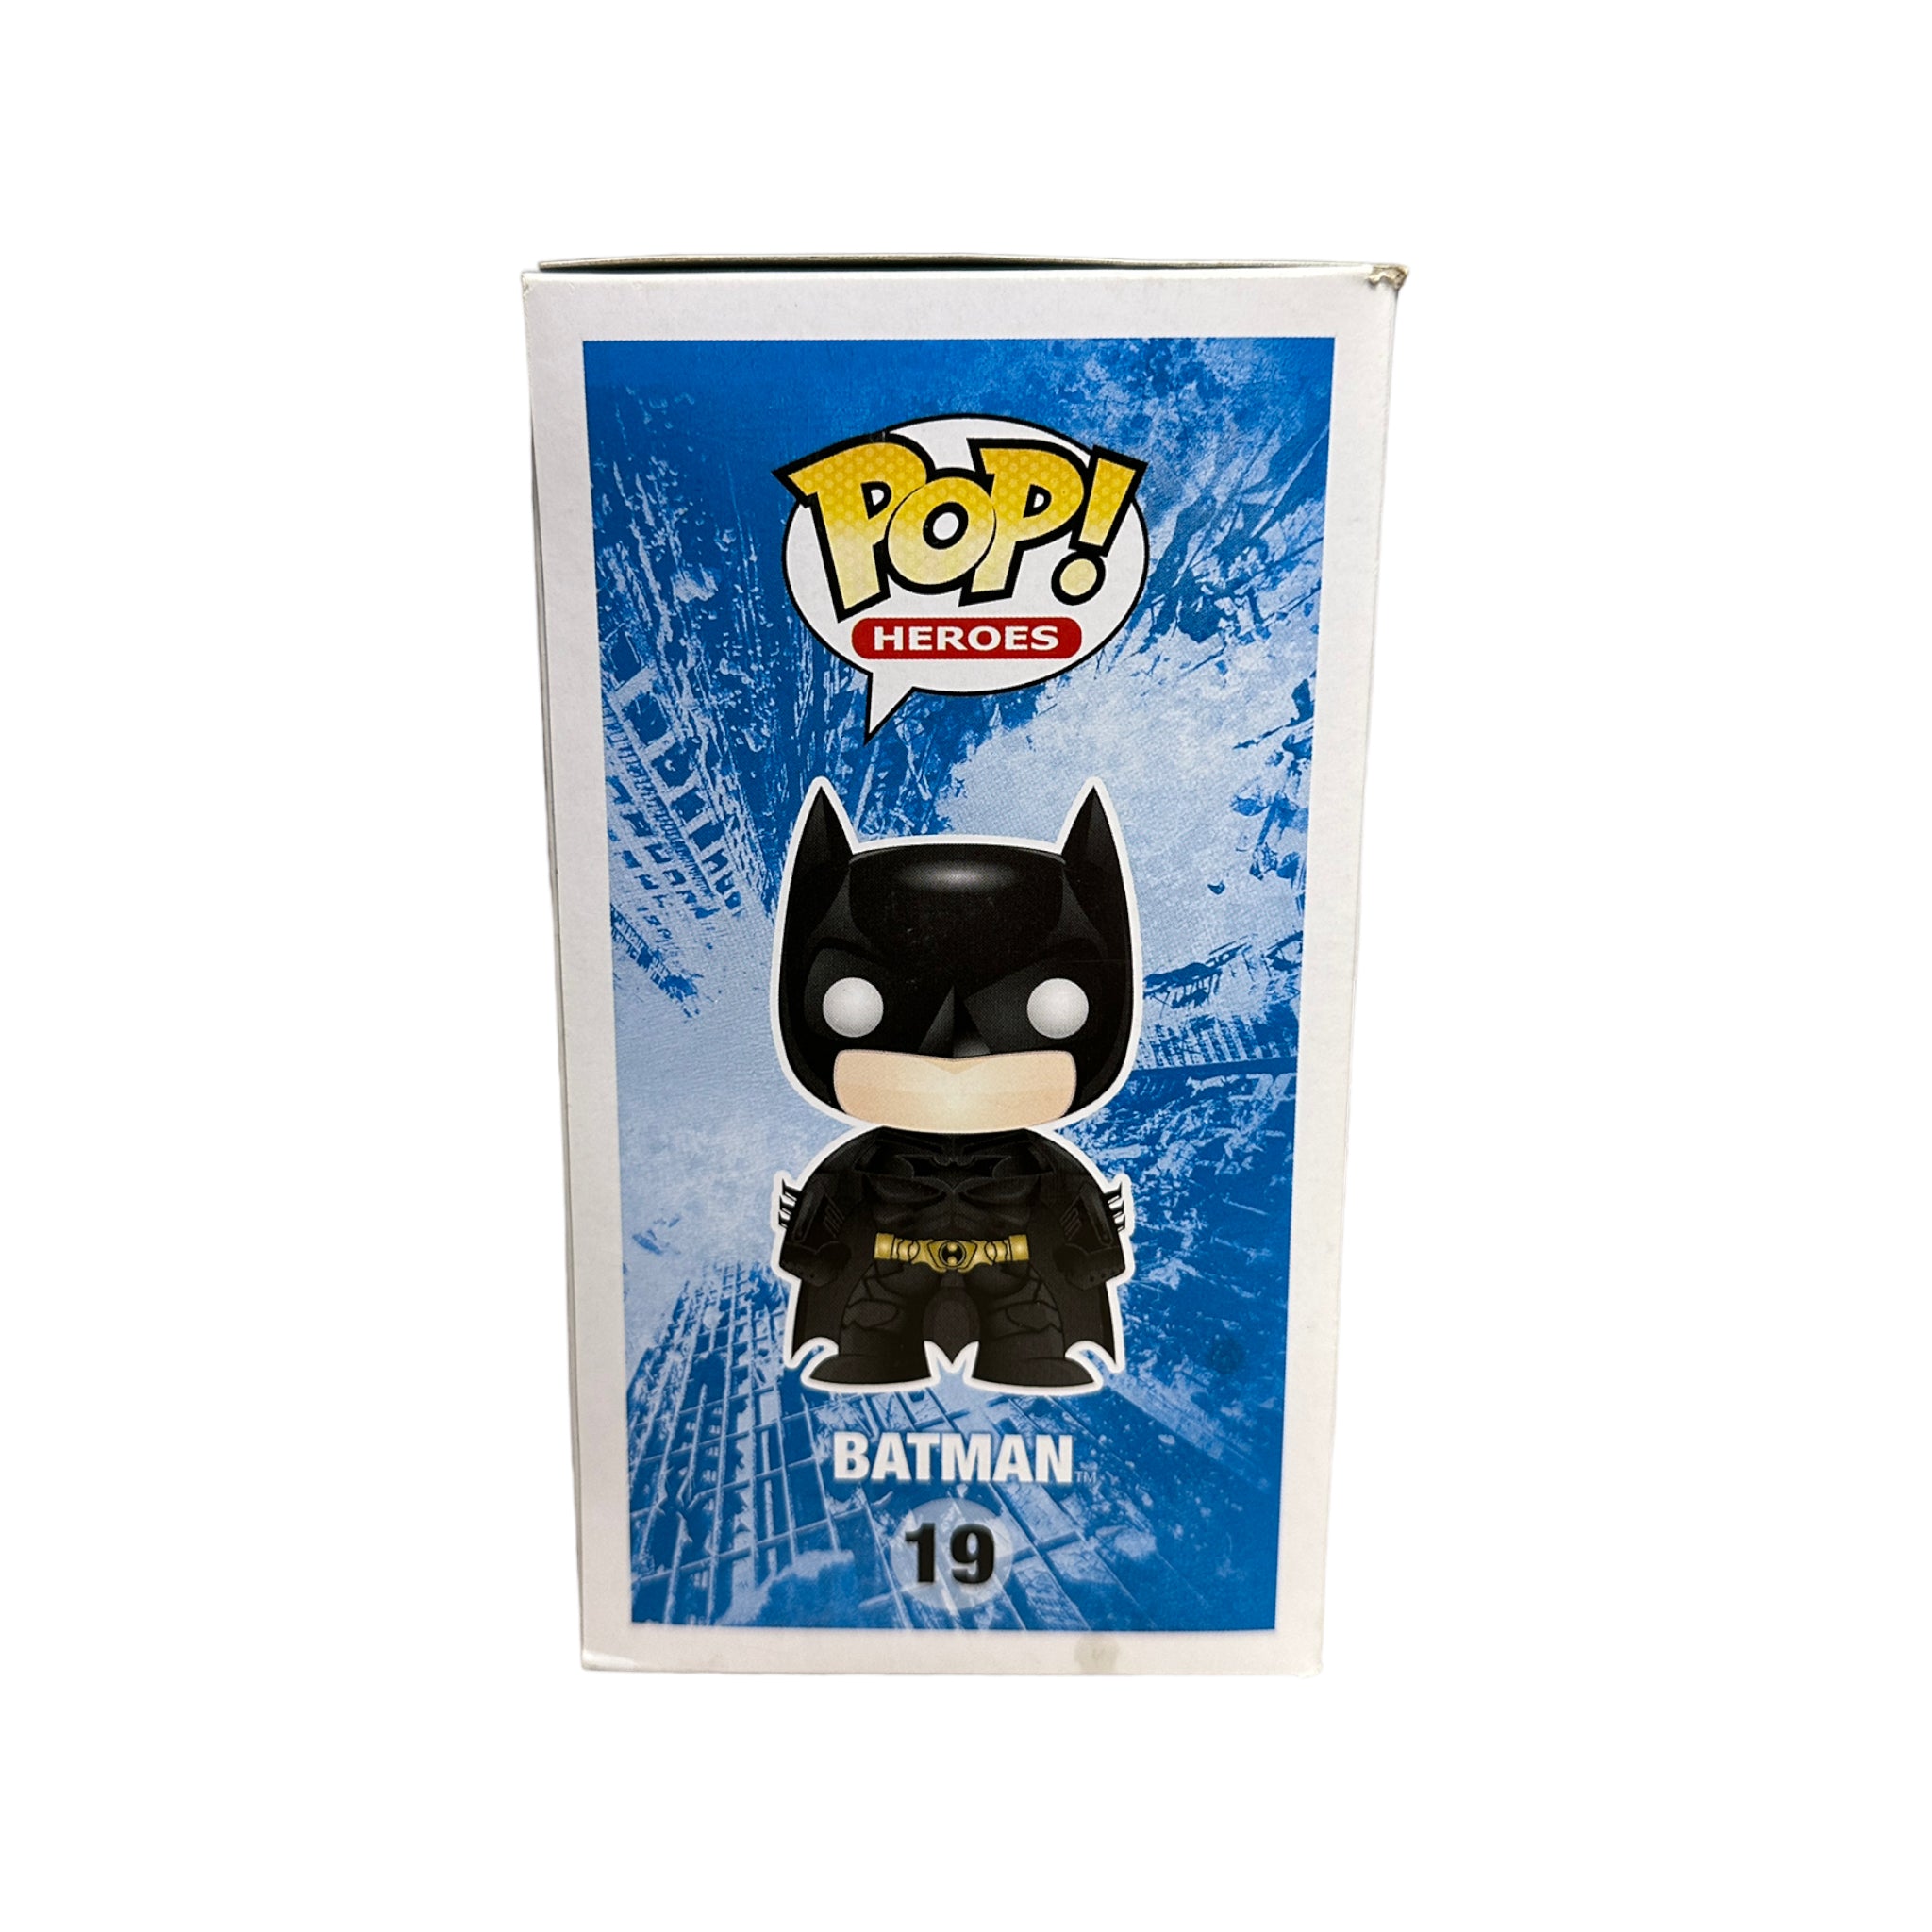 Batman #19 (Patina) Funko Pop! - The Dark Knight Rises - SDCC 2012 Exclusive LE480 Pcs - Condition 7.5/10